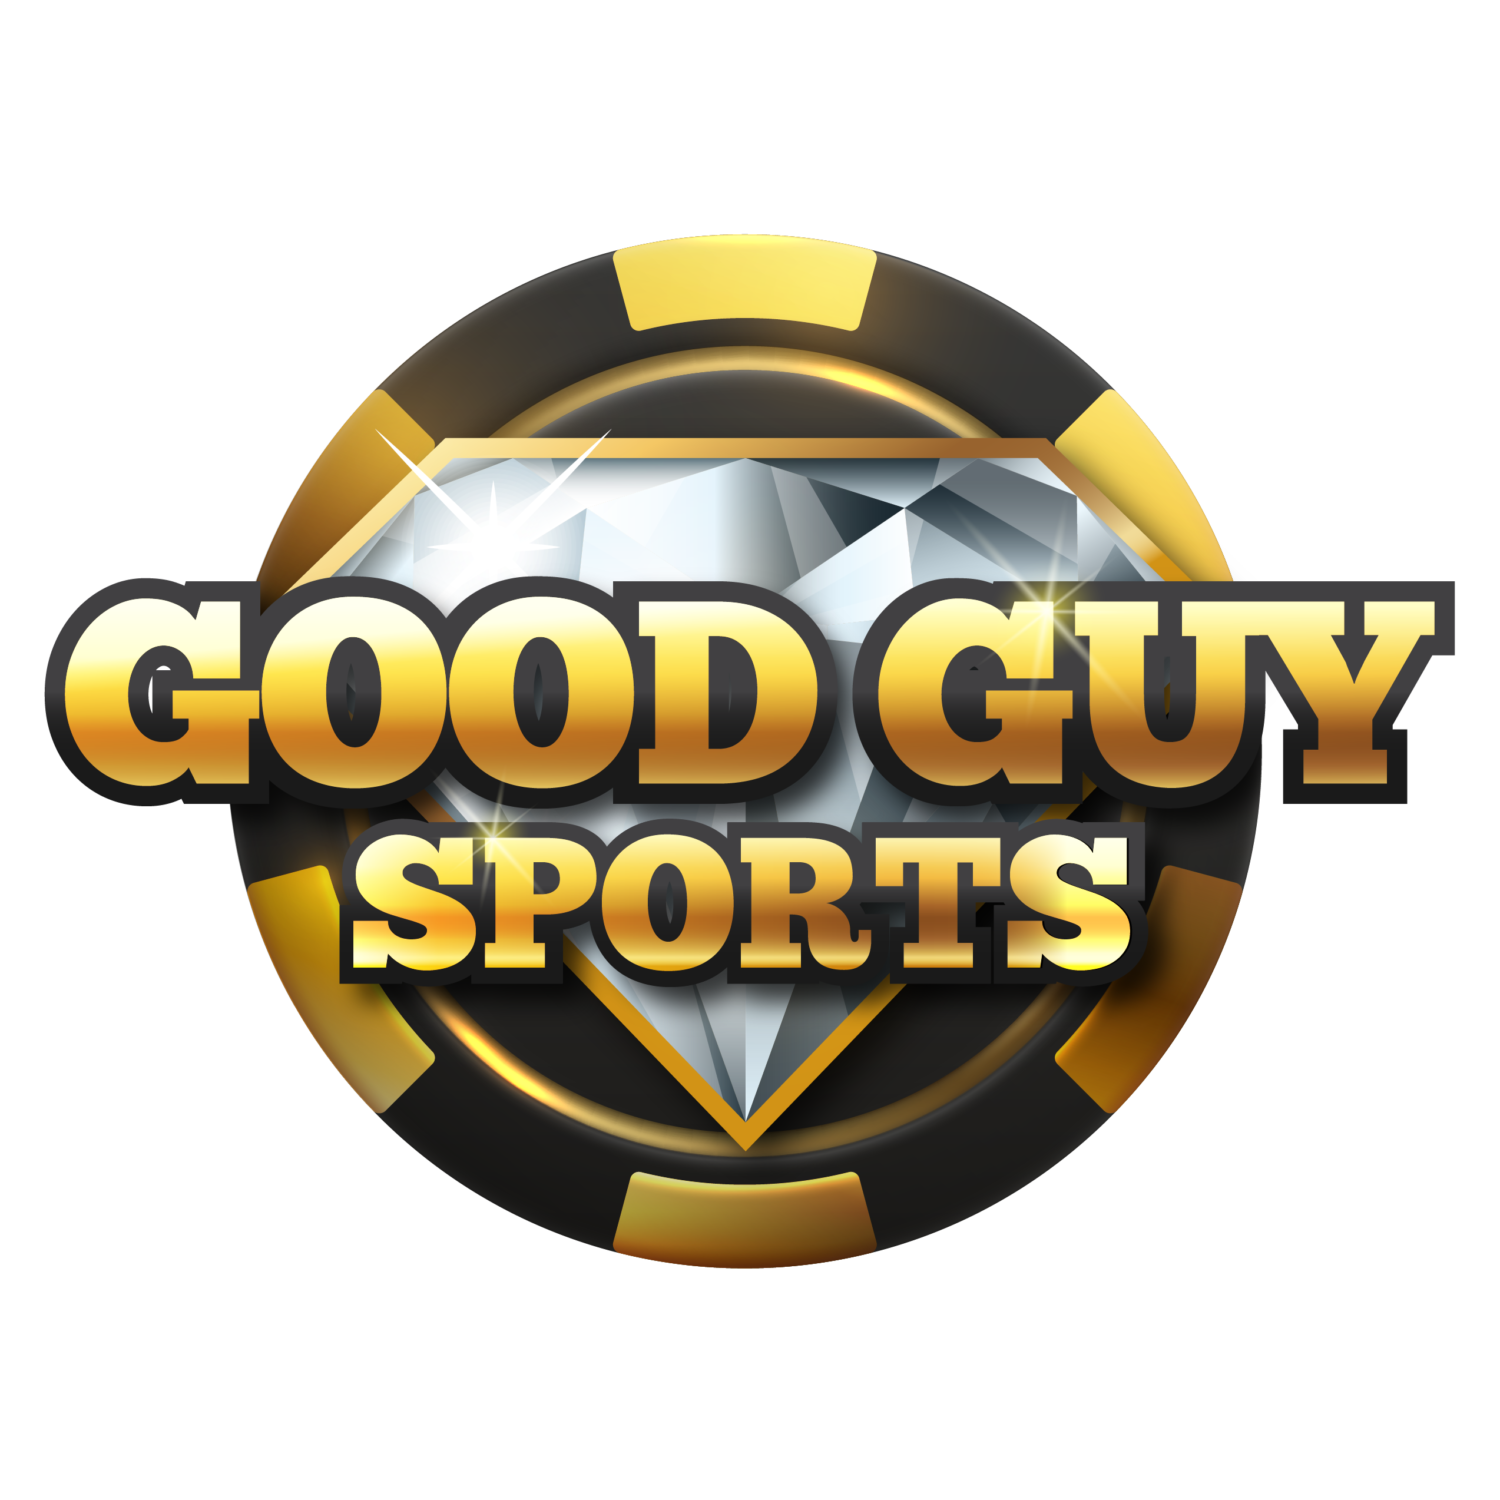 https://goodguy-sports.com/wp-content/uploads/2020/12/2021-01-08.png